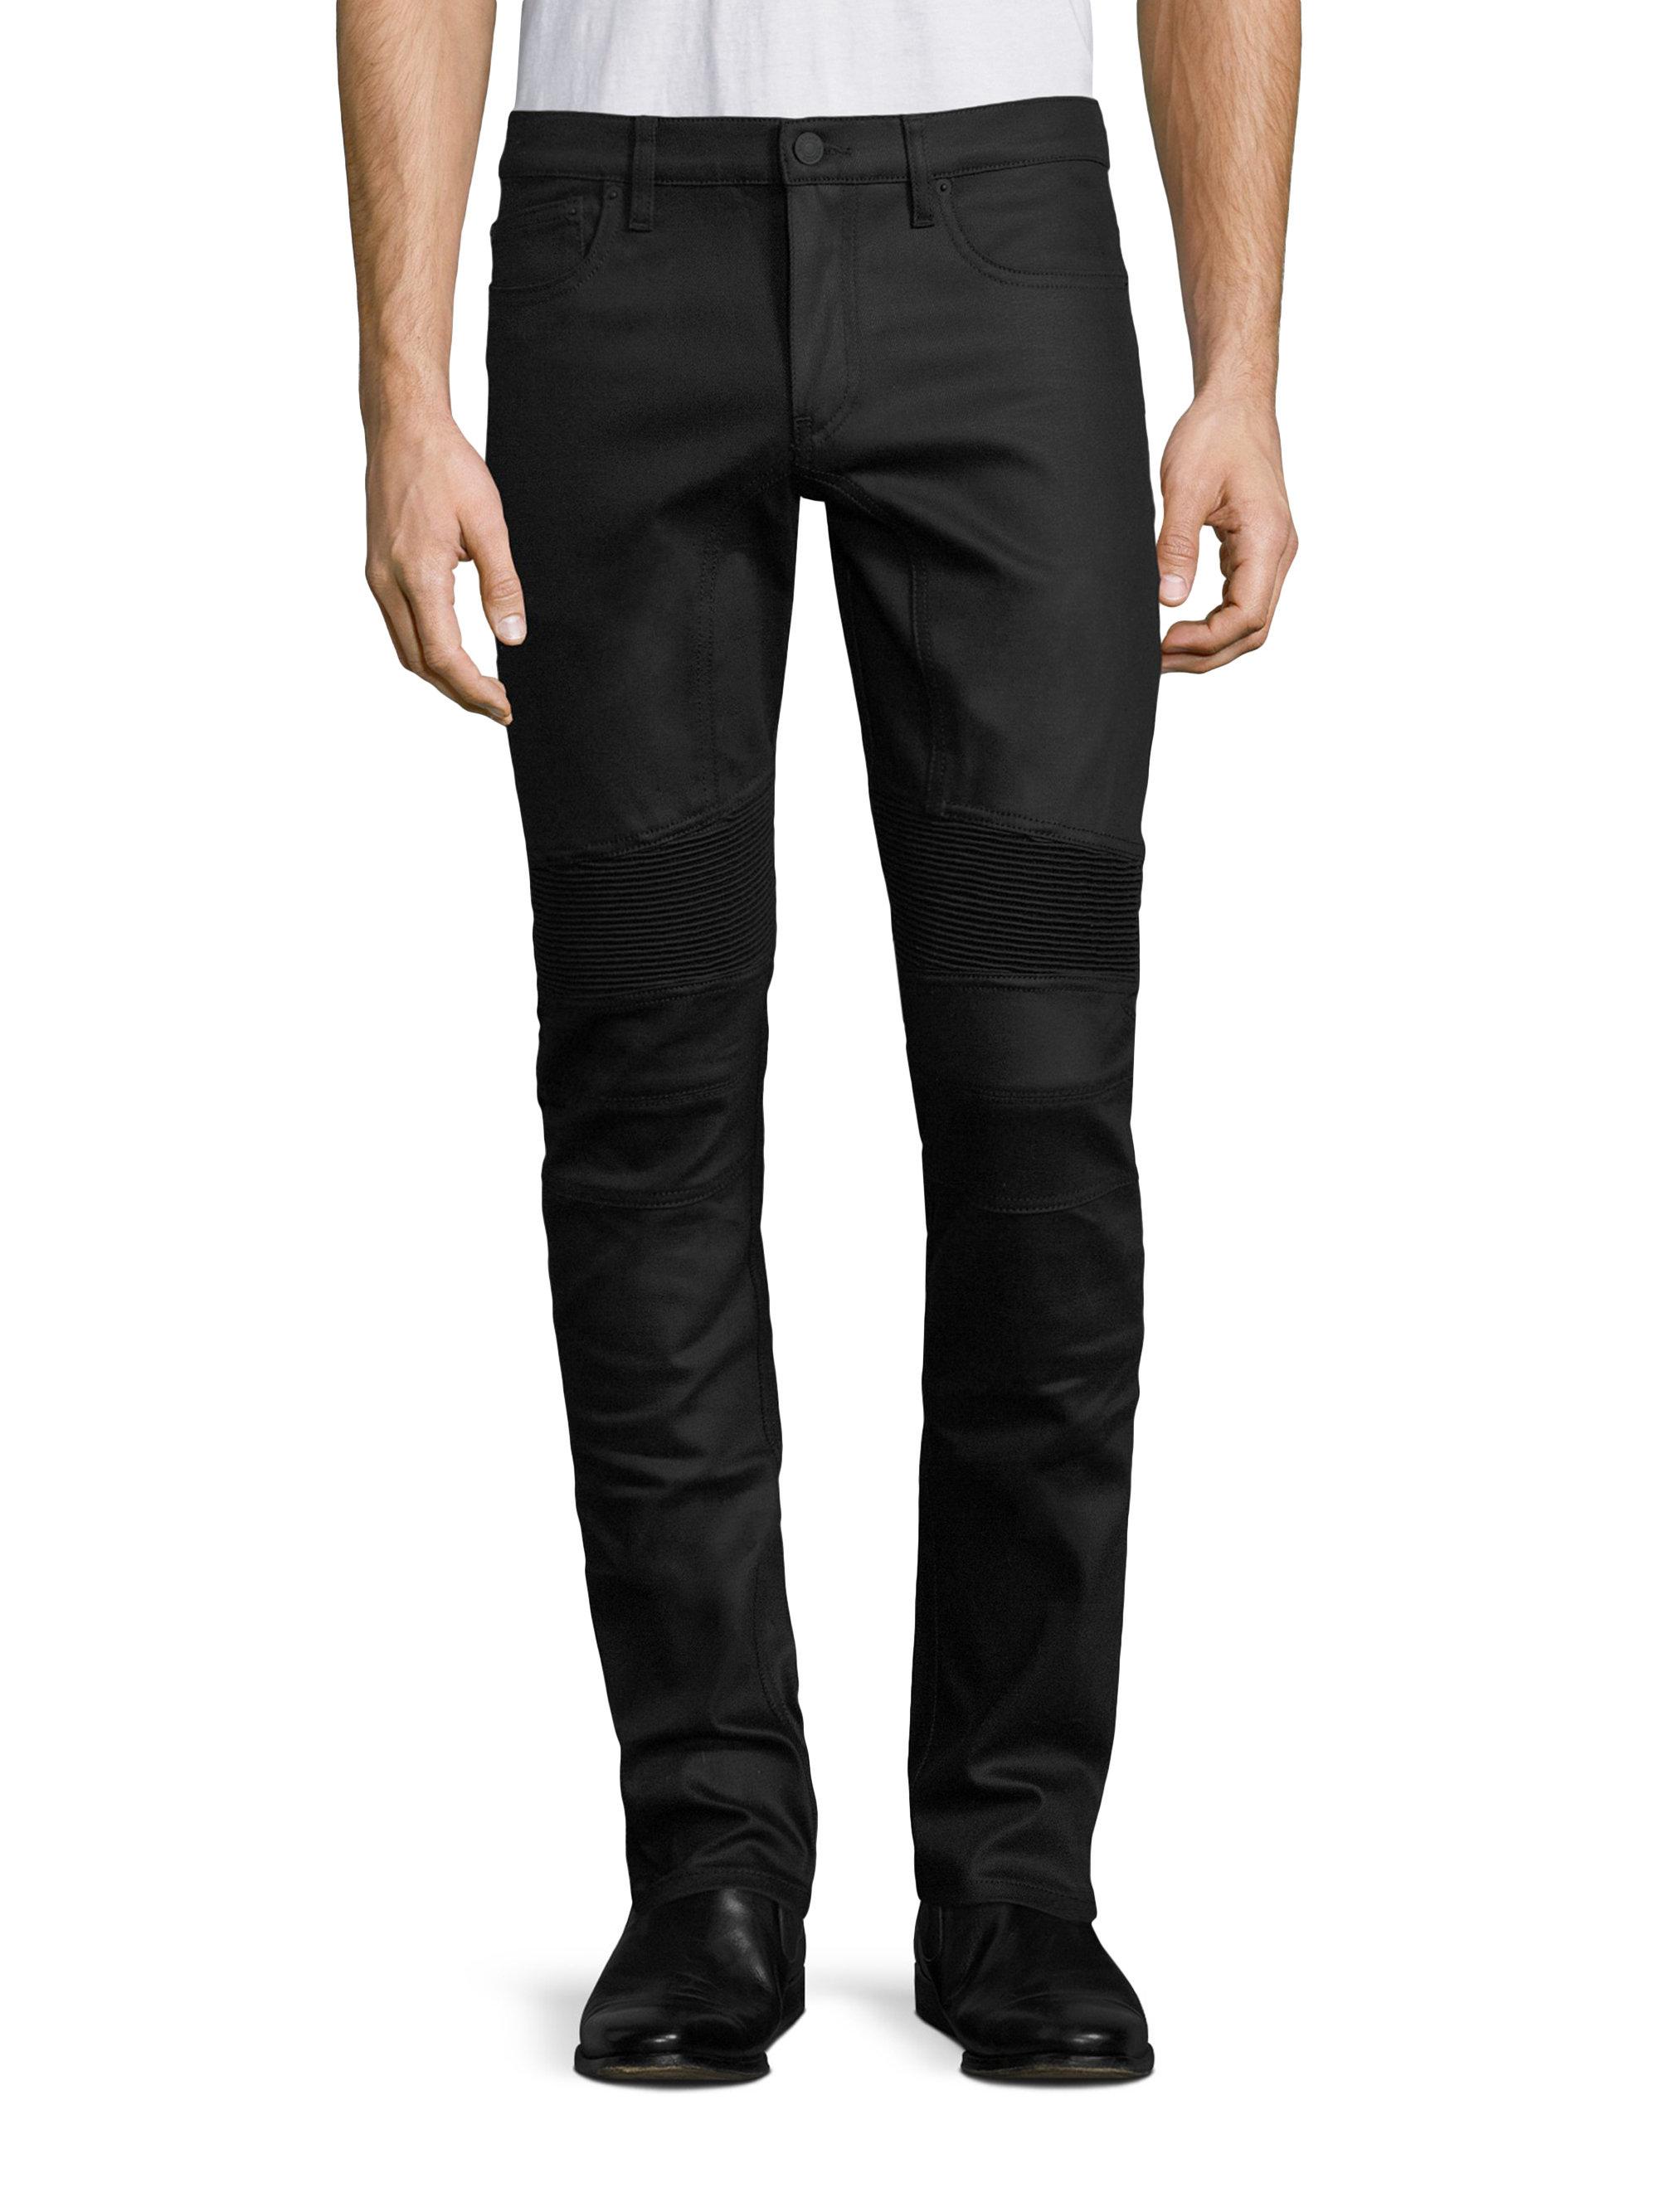 Belstaff Denim Eastham Slim-fit Jeans in Black for Men - Lyst